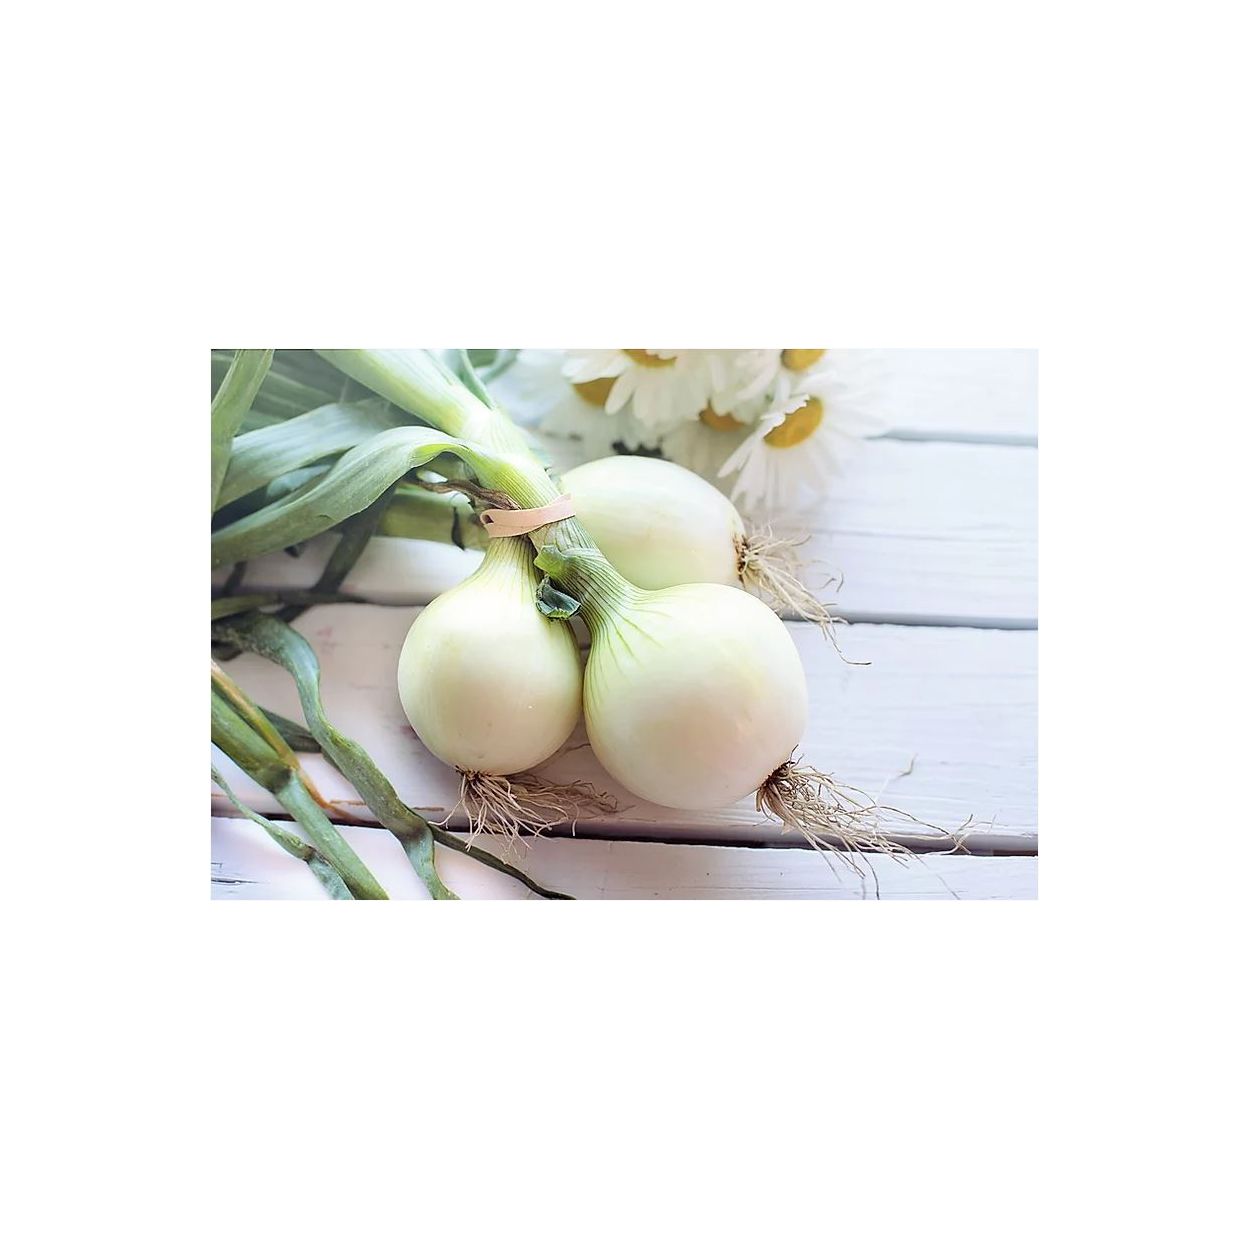 Brim Seed Co. - Crystal White Wax Bermuda Onion Heirloom Seed